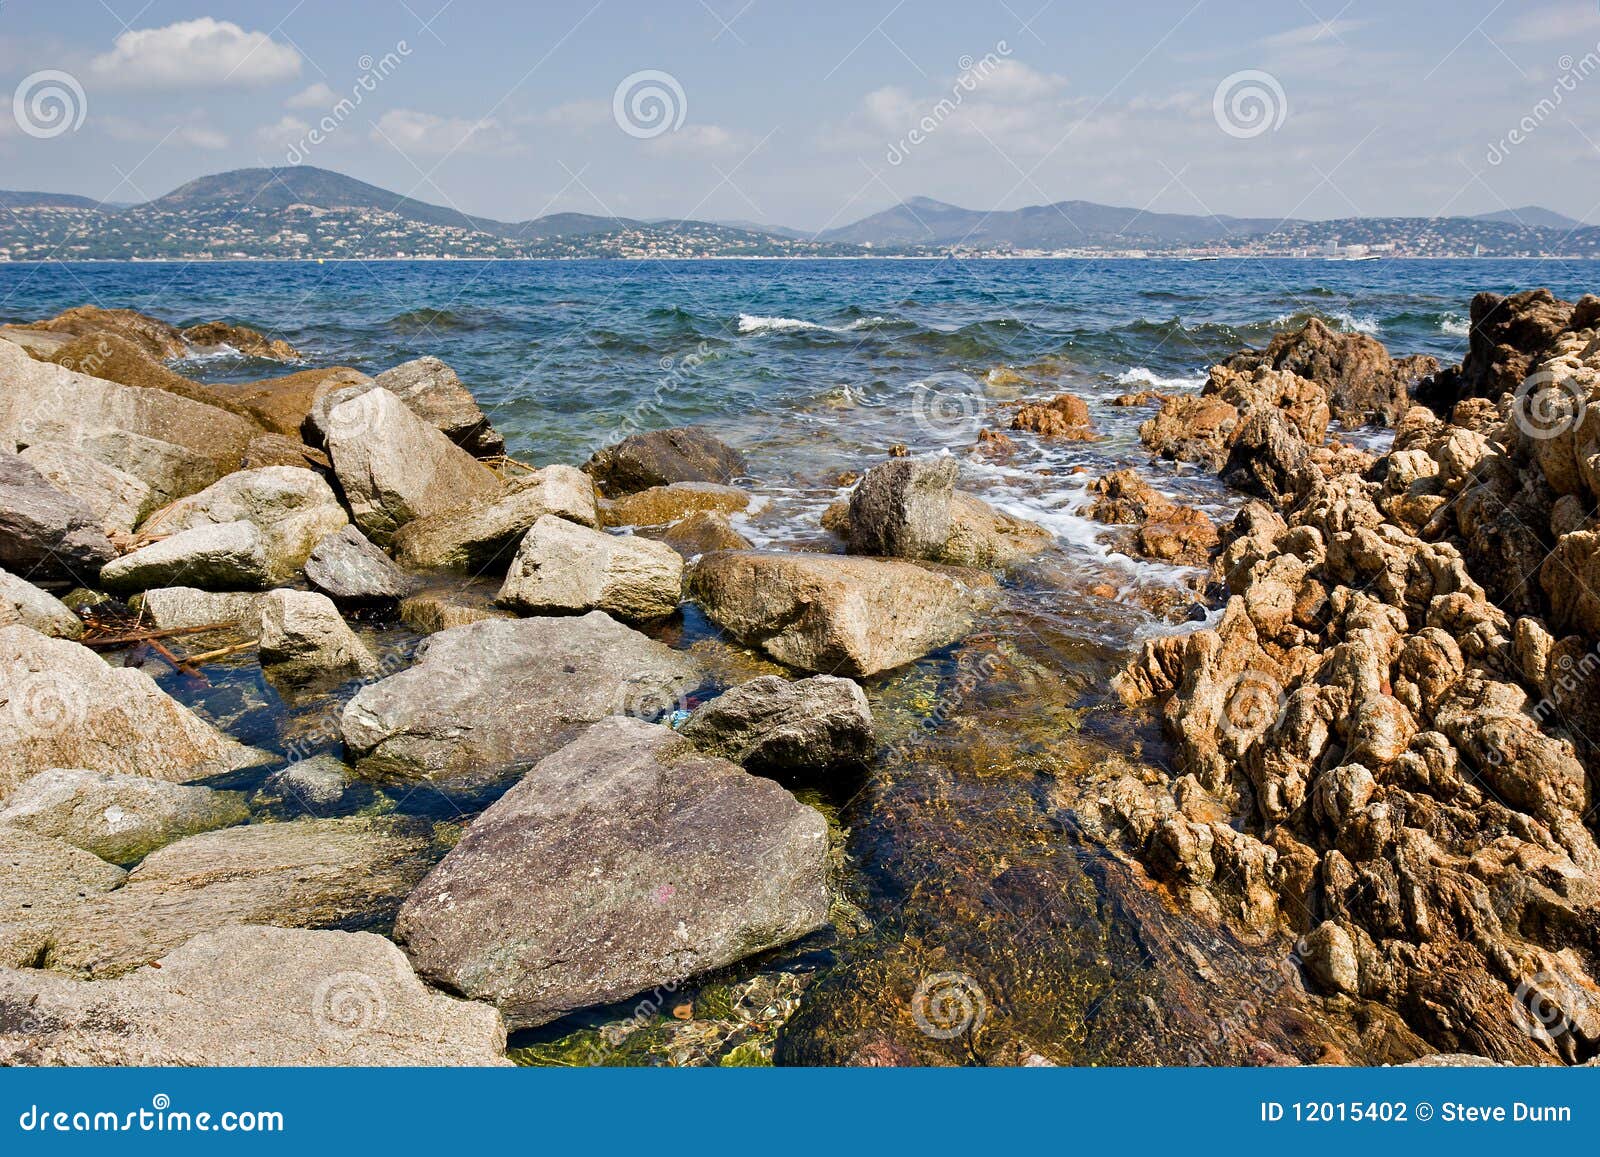 Rocky St-Tropez shoreline stock photo. Image of coast - 12015402